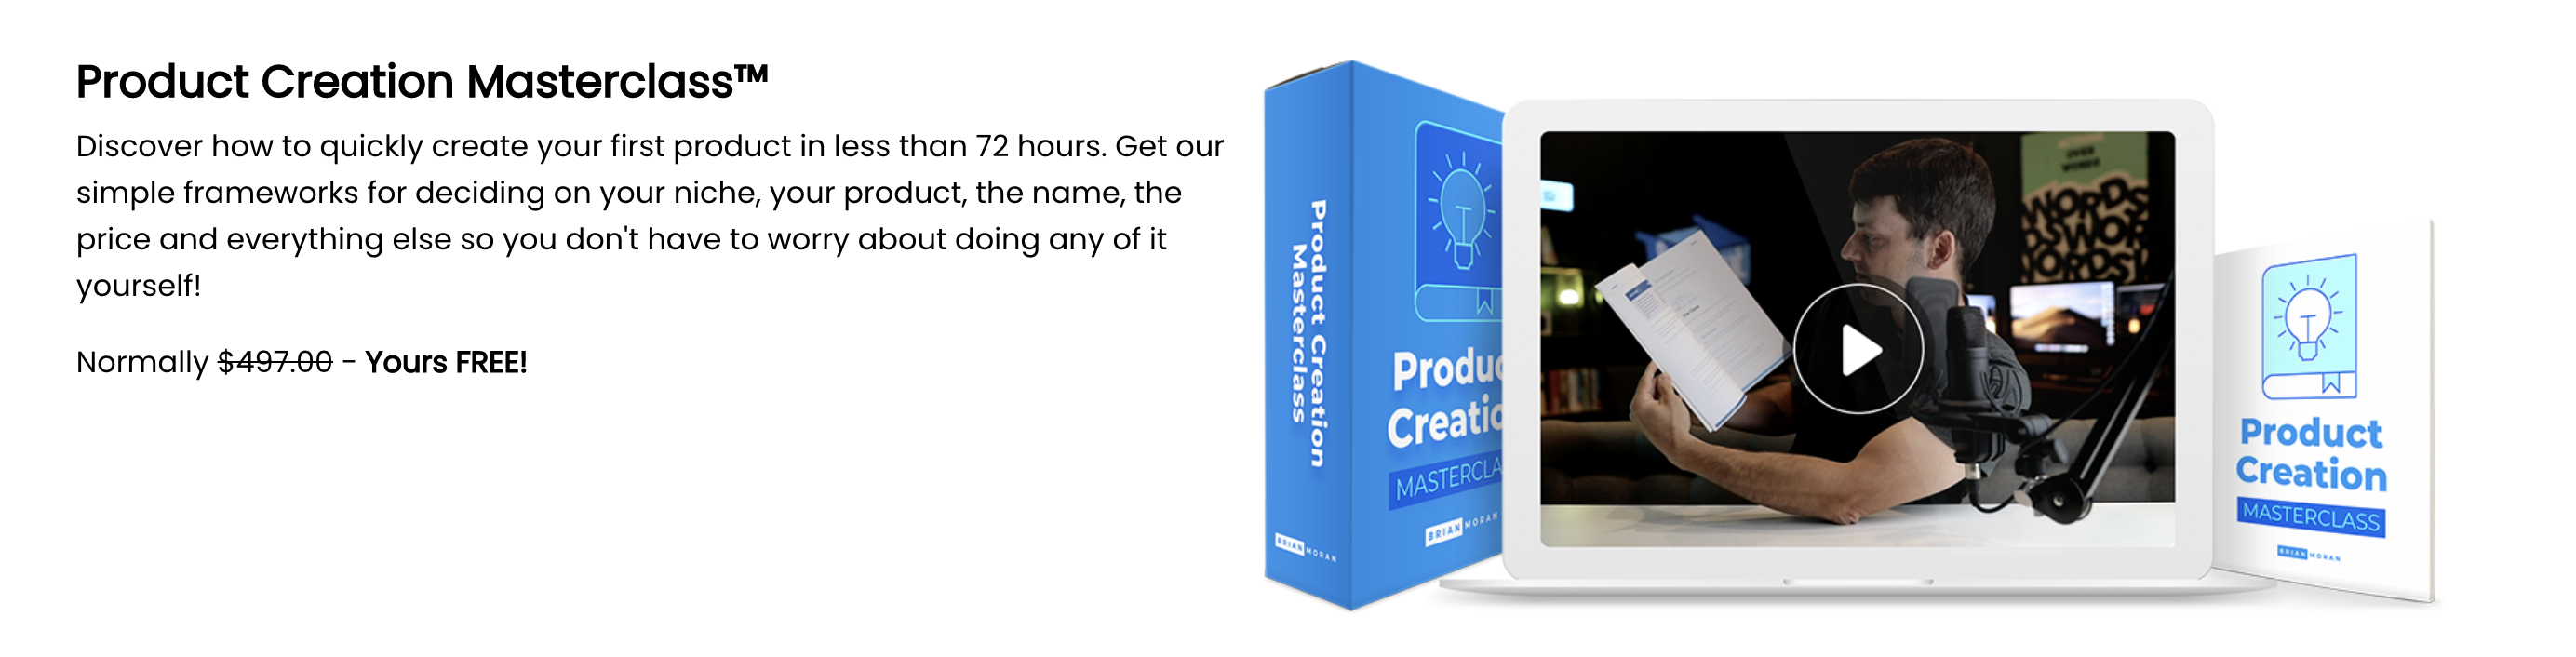 Product Creation Masterclass Samcart